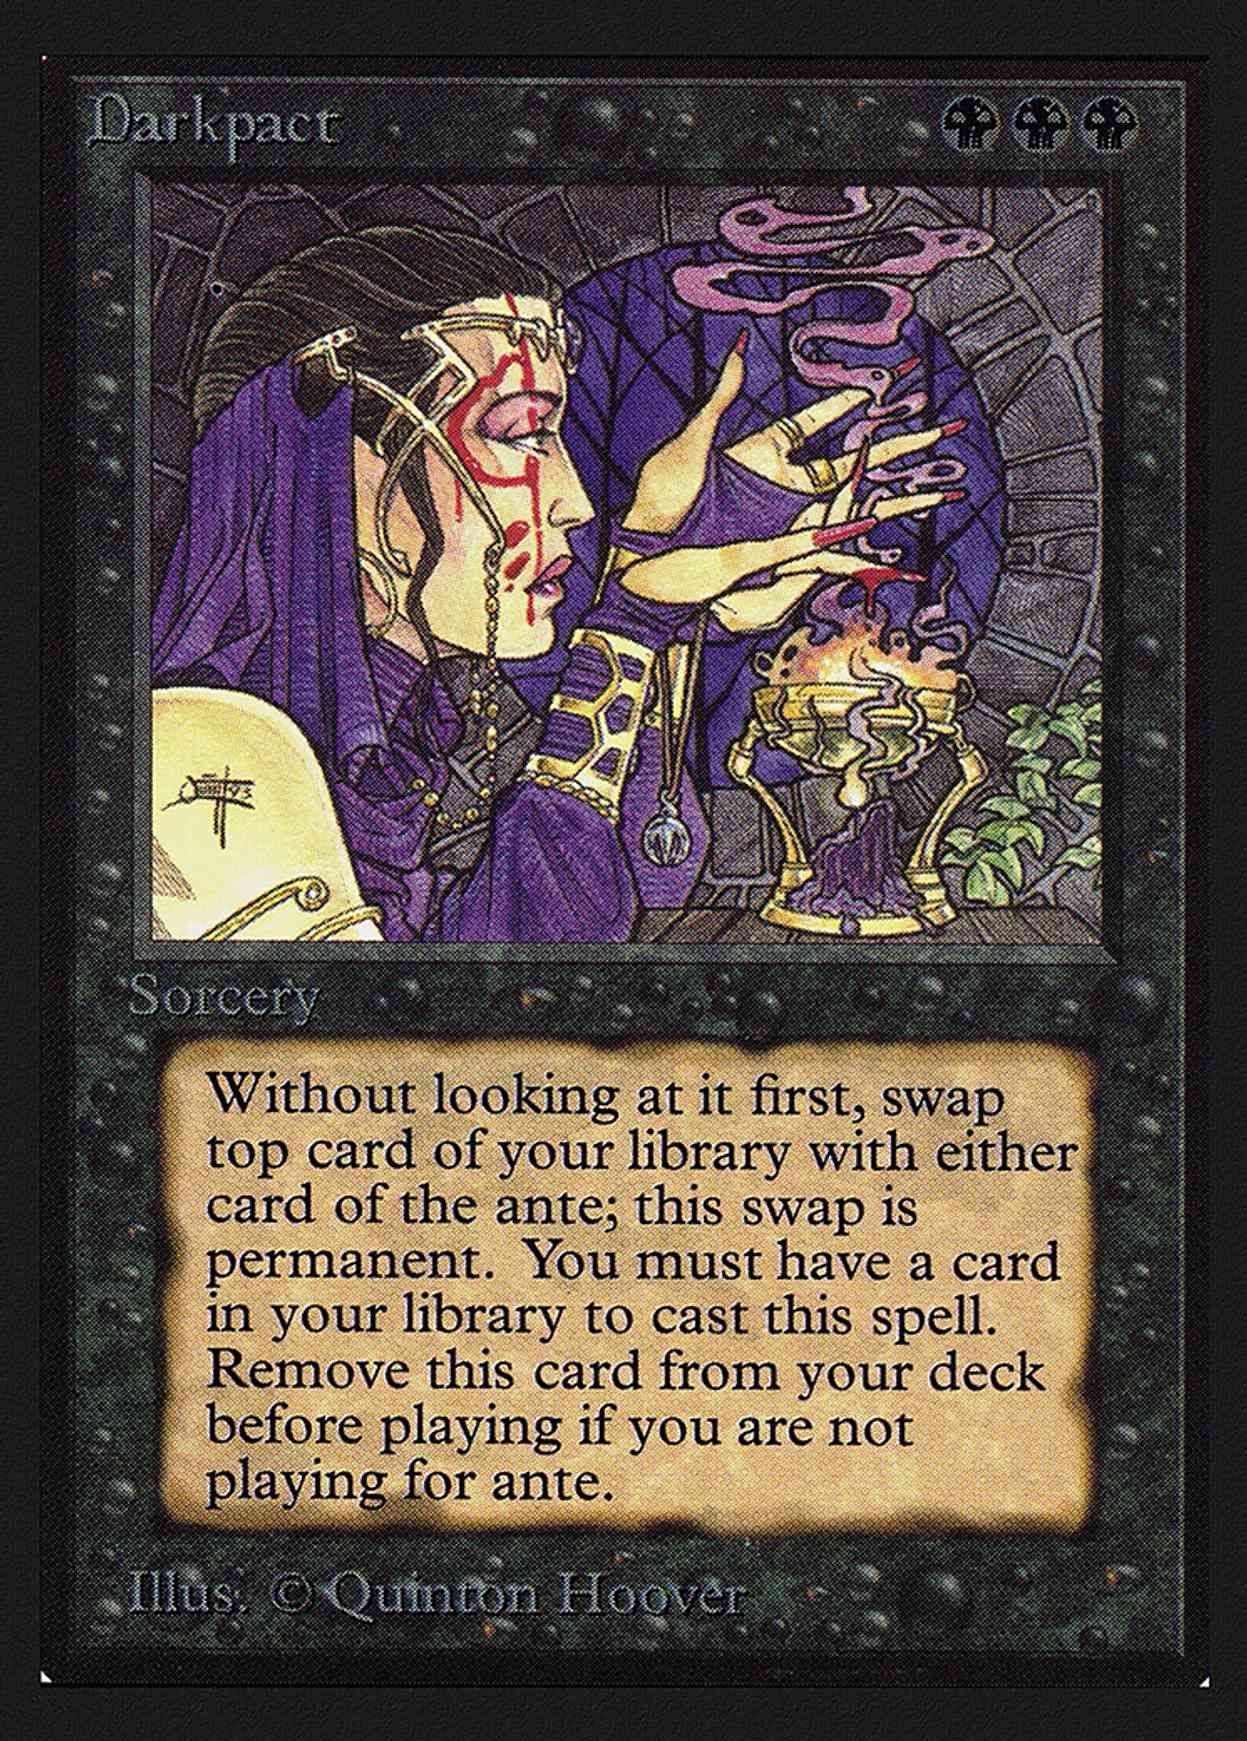 Darkpact (CE) magic card front